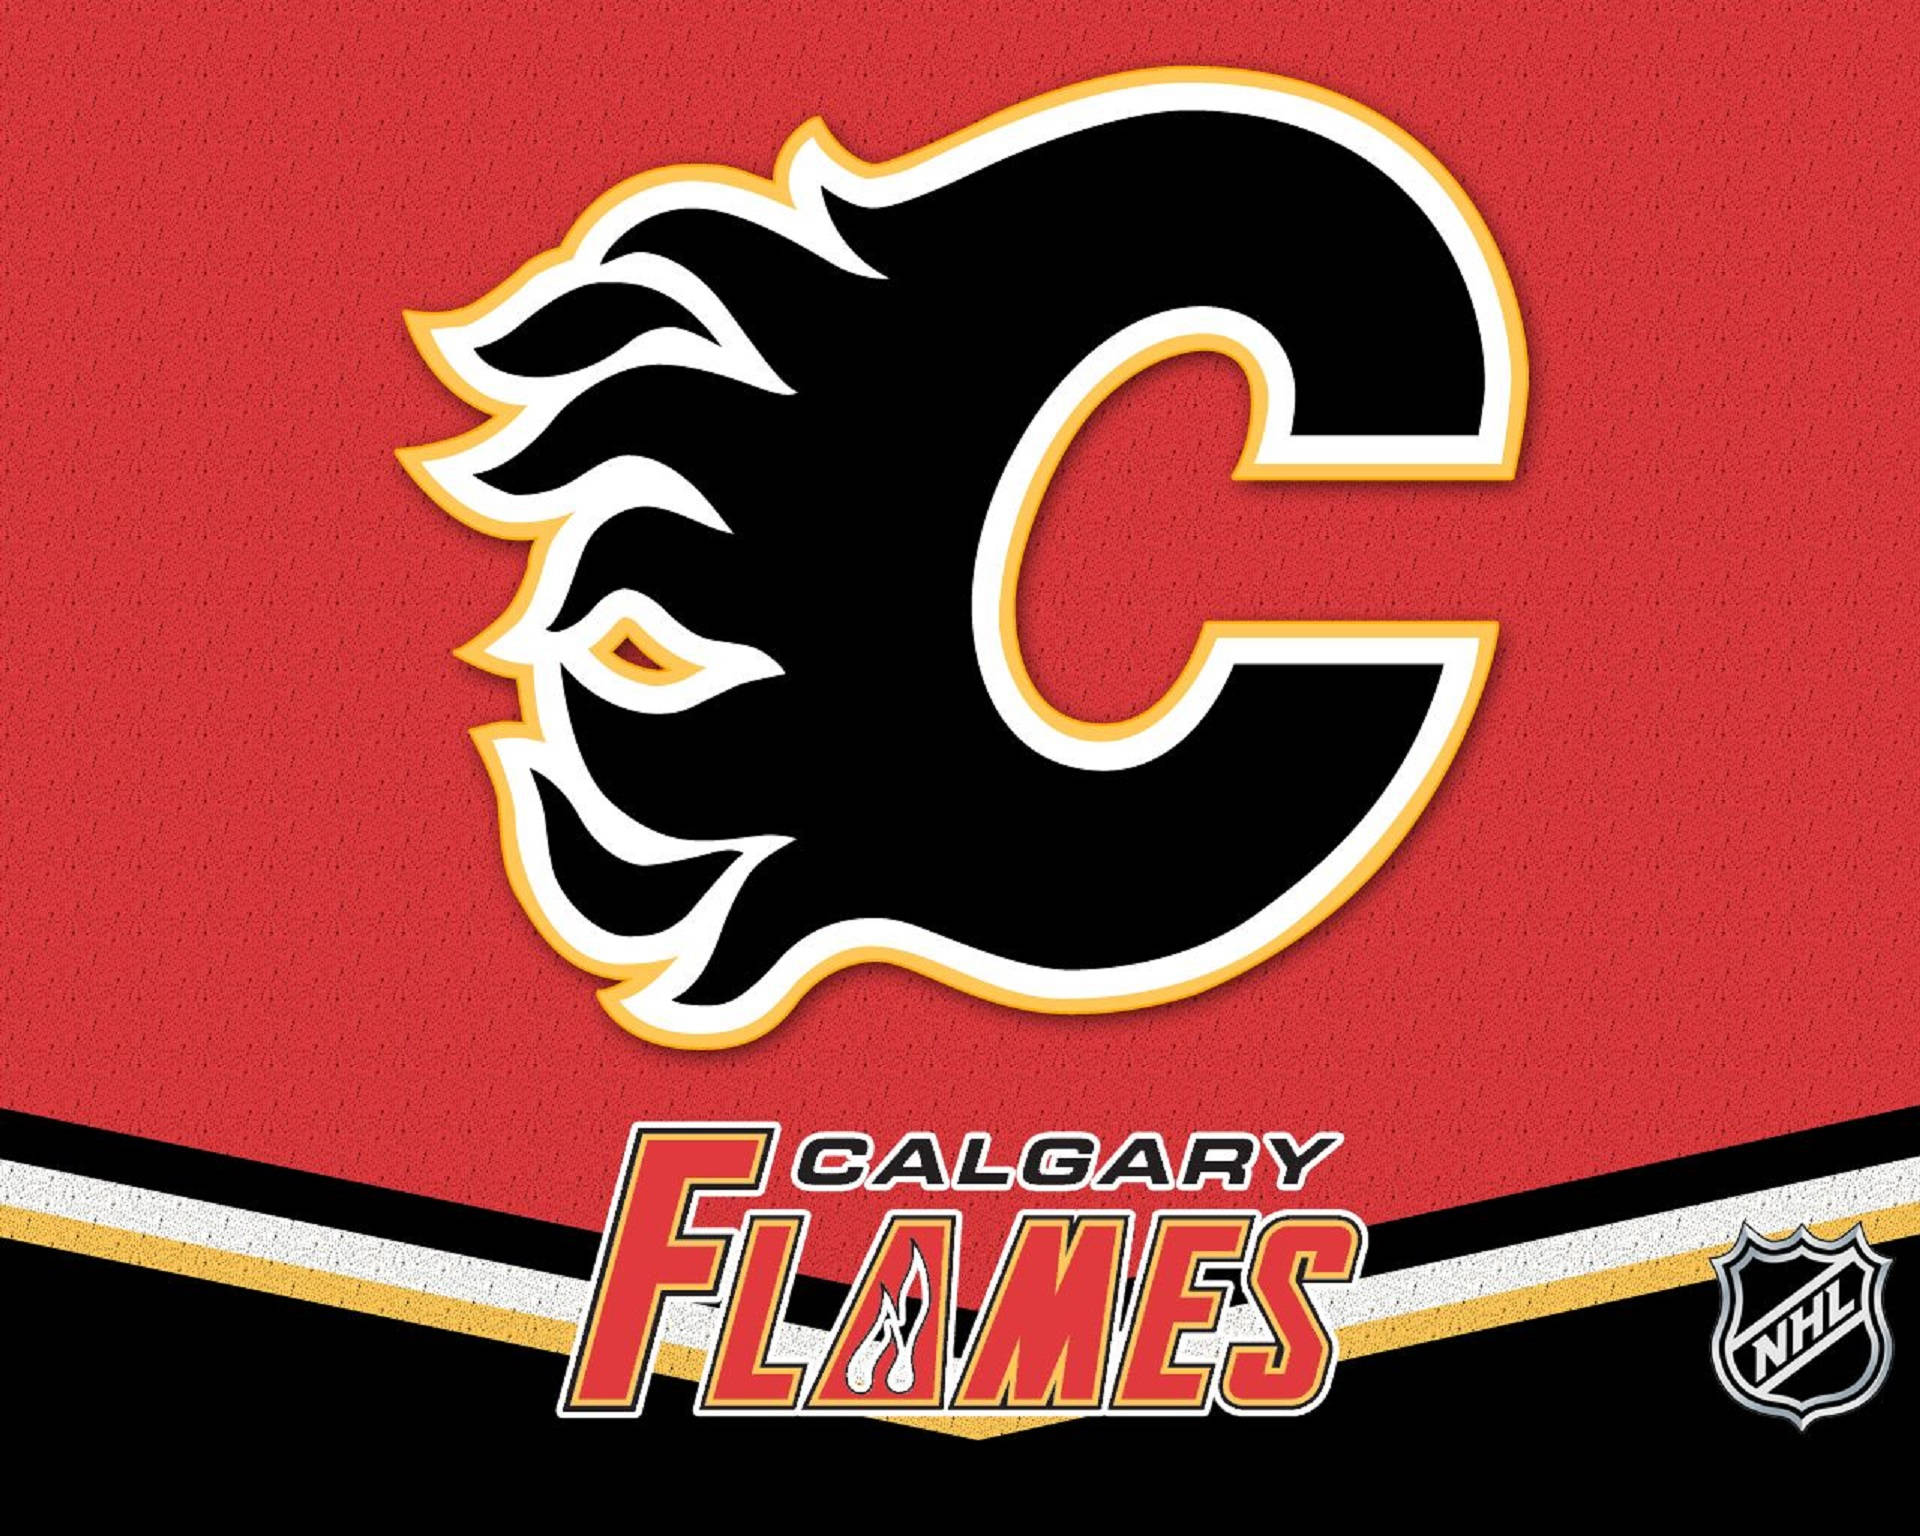 Calgary Flames Wallpapers - Top 20 Best Calgary Flames Wallpapers [ HQ ]